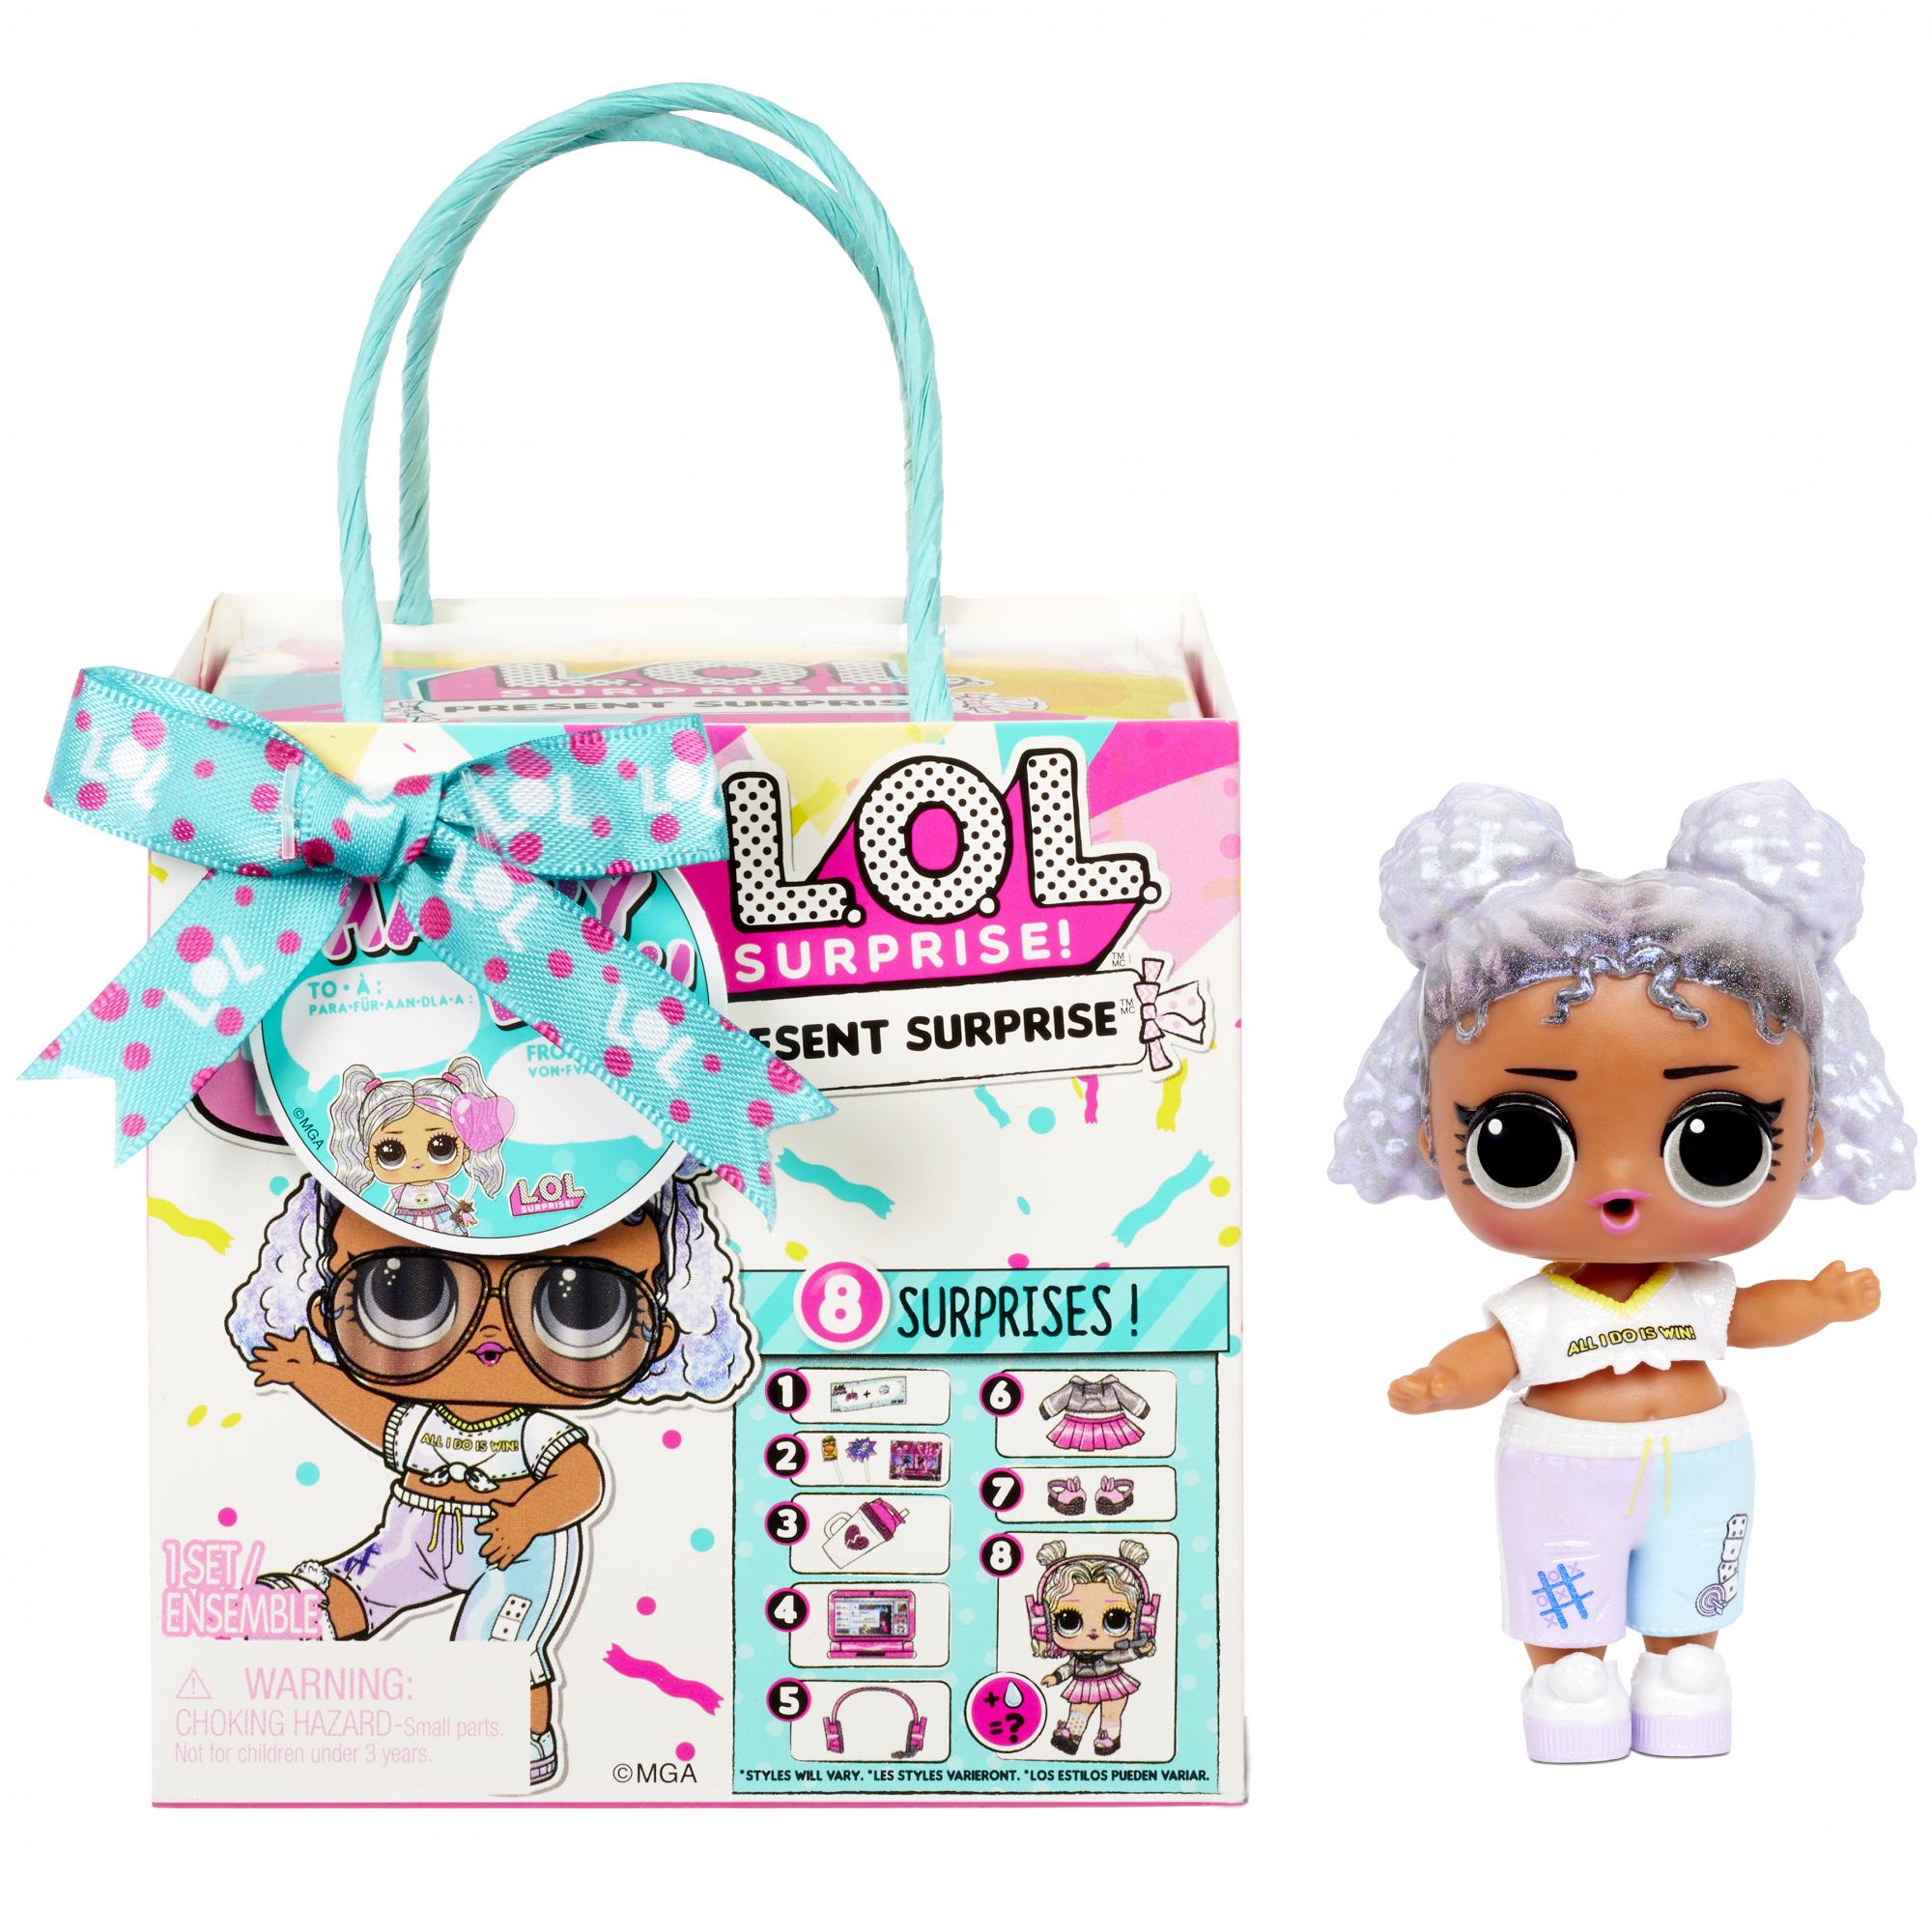 Игрушка-сюрприз L.O.L. Surprise! Кукла Подарок PDQ 3 серия, 576396 игрушка mga s miniverse food series diner 589938